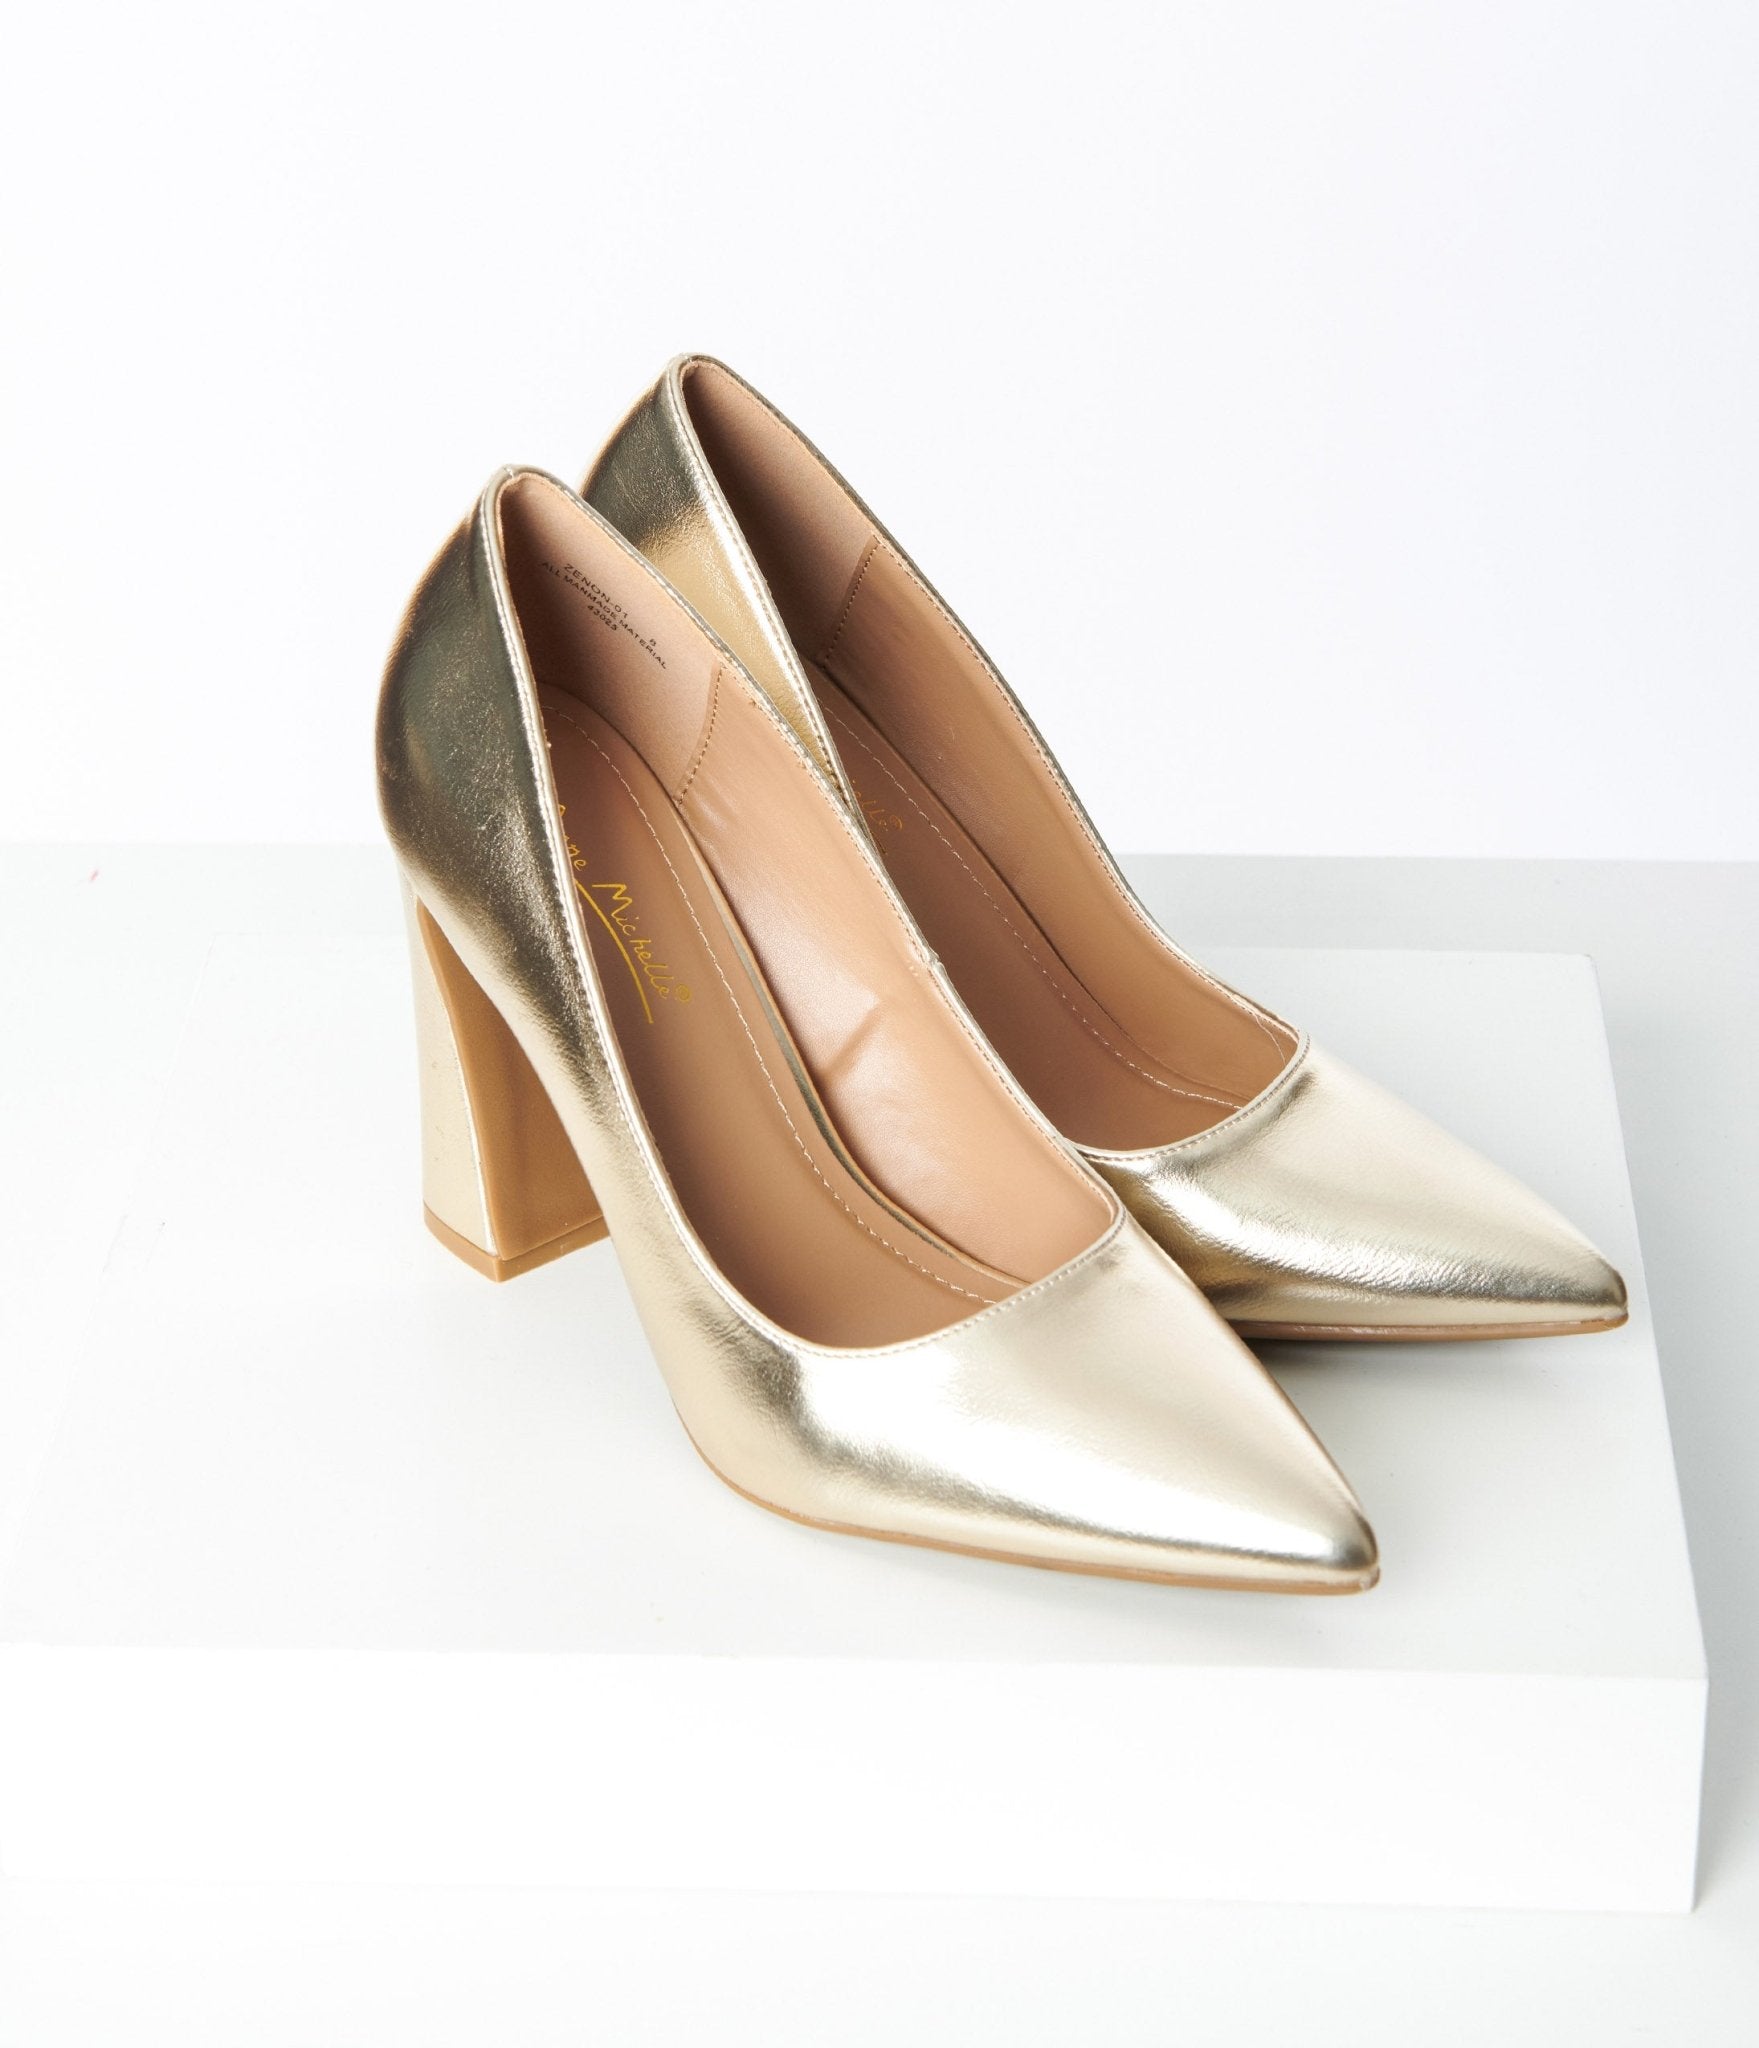 Buy ivory fashion STELT Heel Sandal (36) Gold at Amazon.in